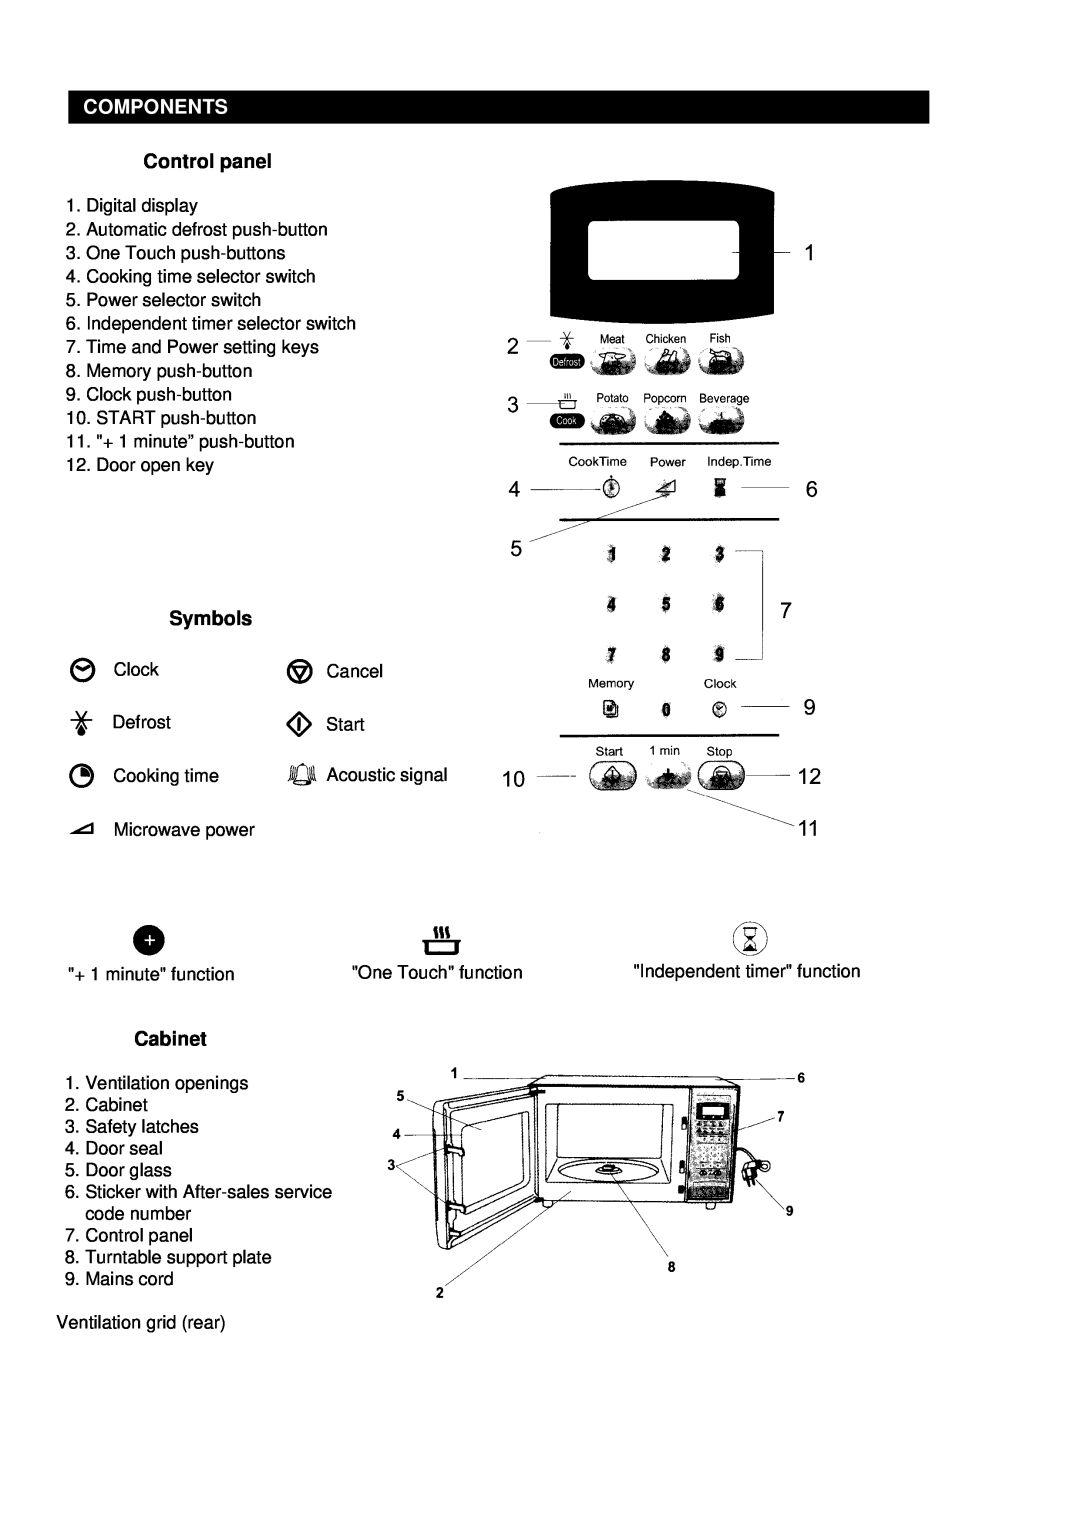 Palsonic PMO-758 manual Components, Control panel, Symbols, Cabinet 